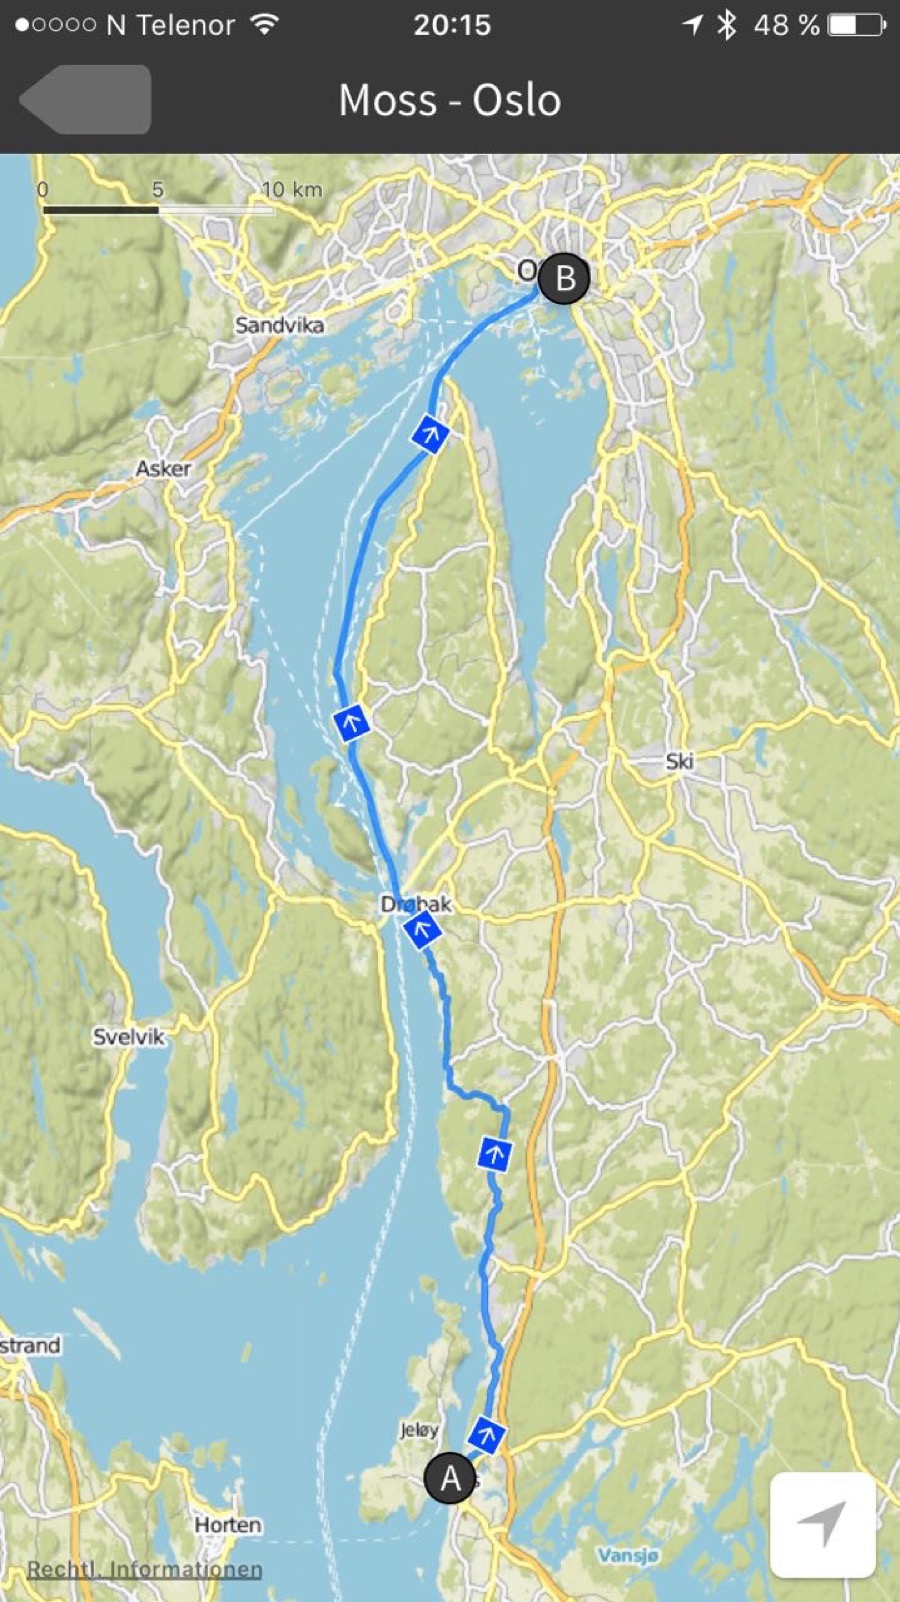 Moss - Oslo